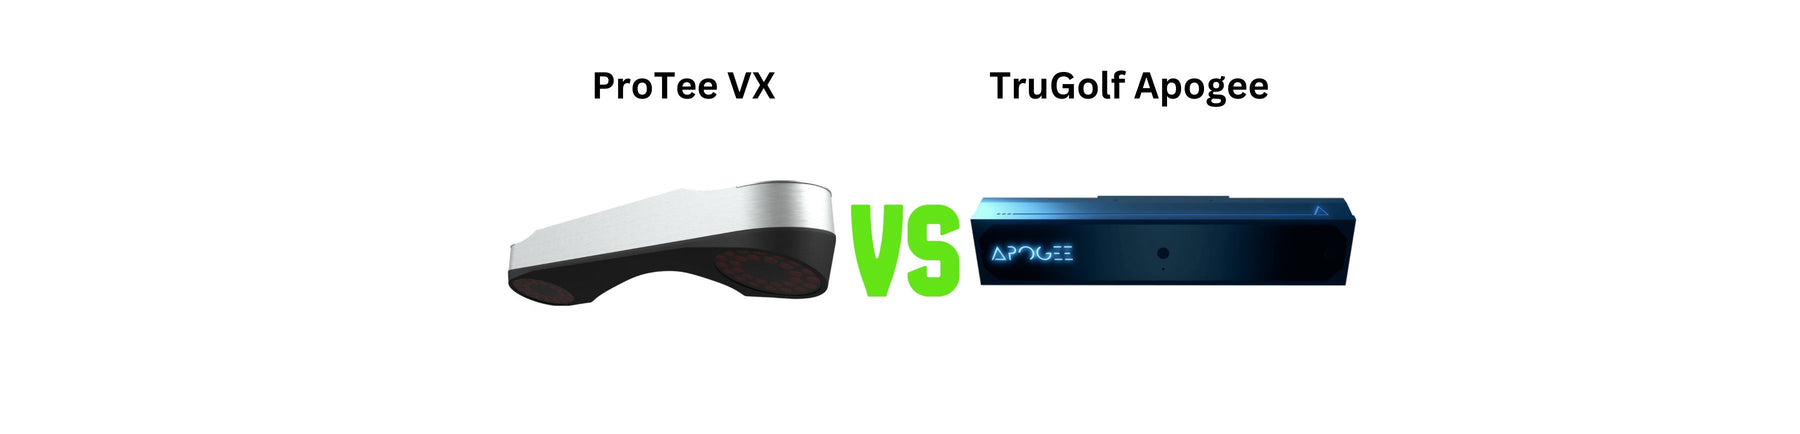 ProTee VX vs. TruGolf Apogee Golf Simulators